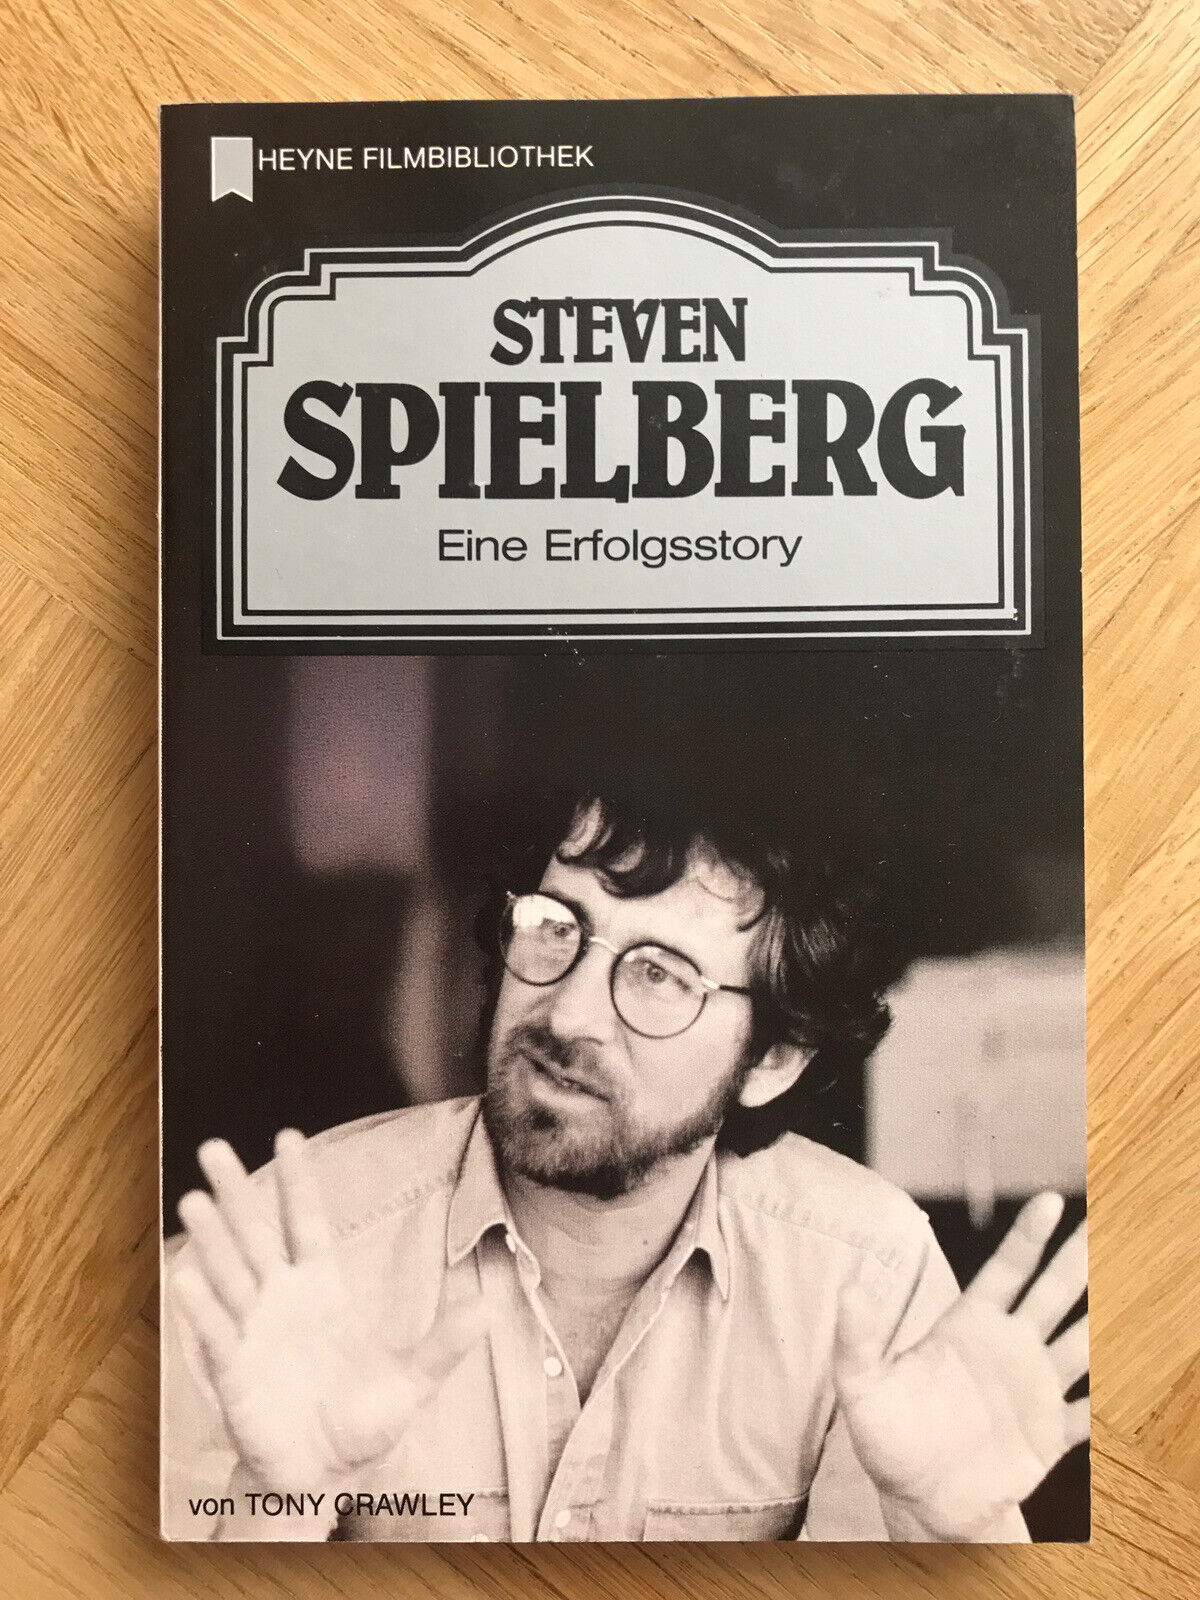 Steven Spielberg * Eine Erfolgsstory * Heyne filmbibliothek Nr.134 - Tony Crawley